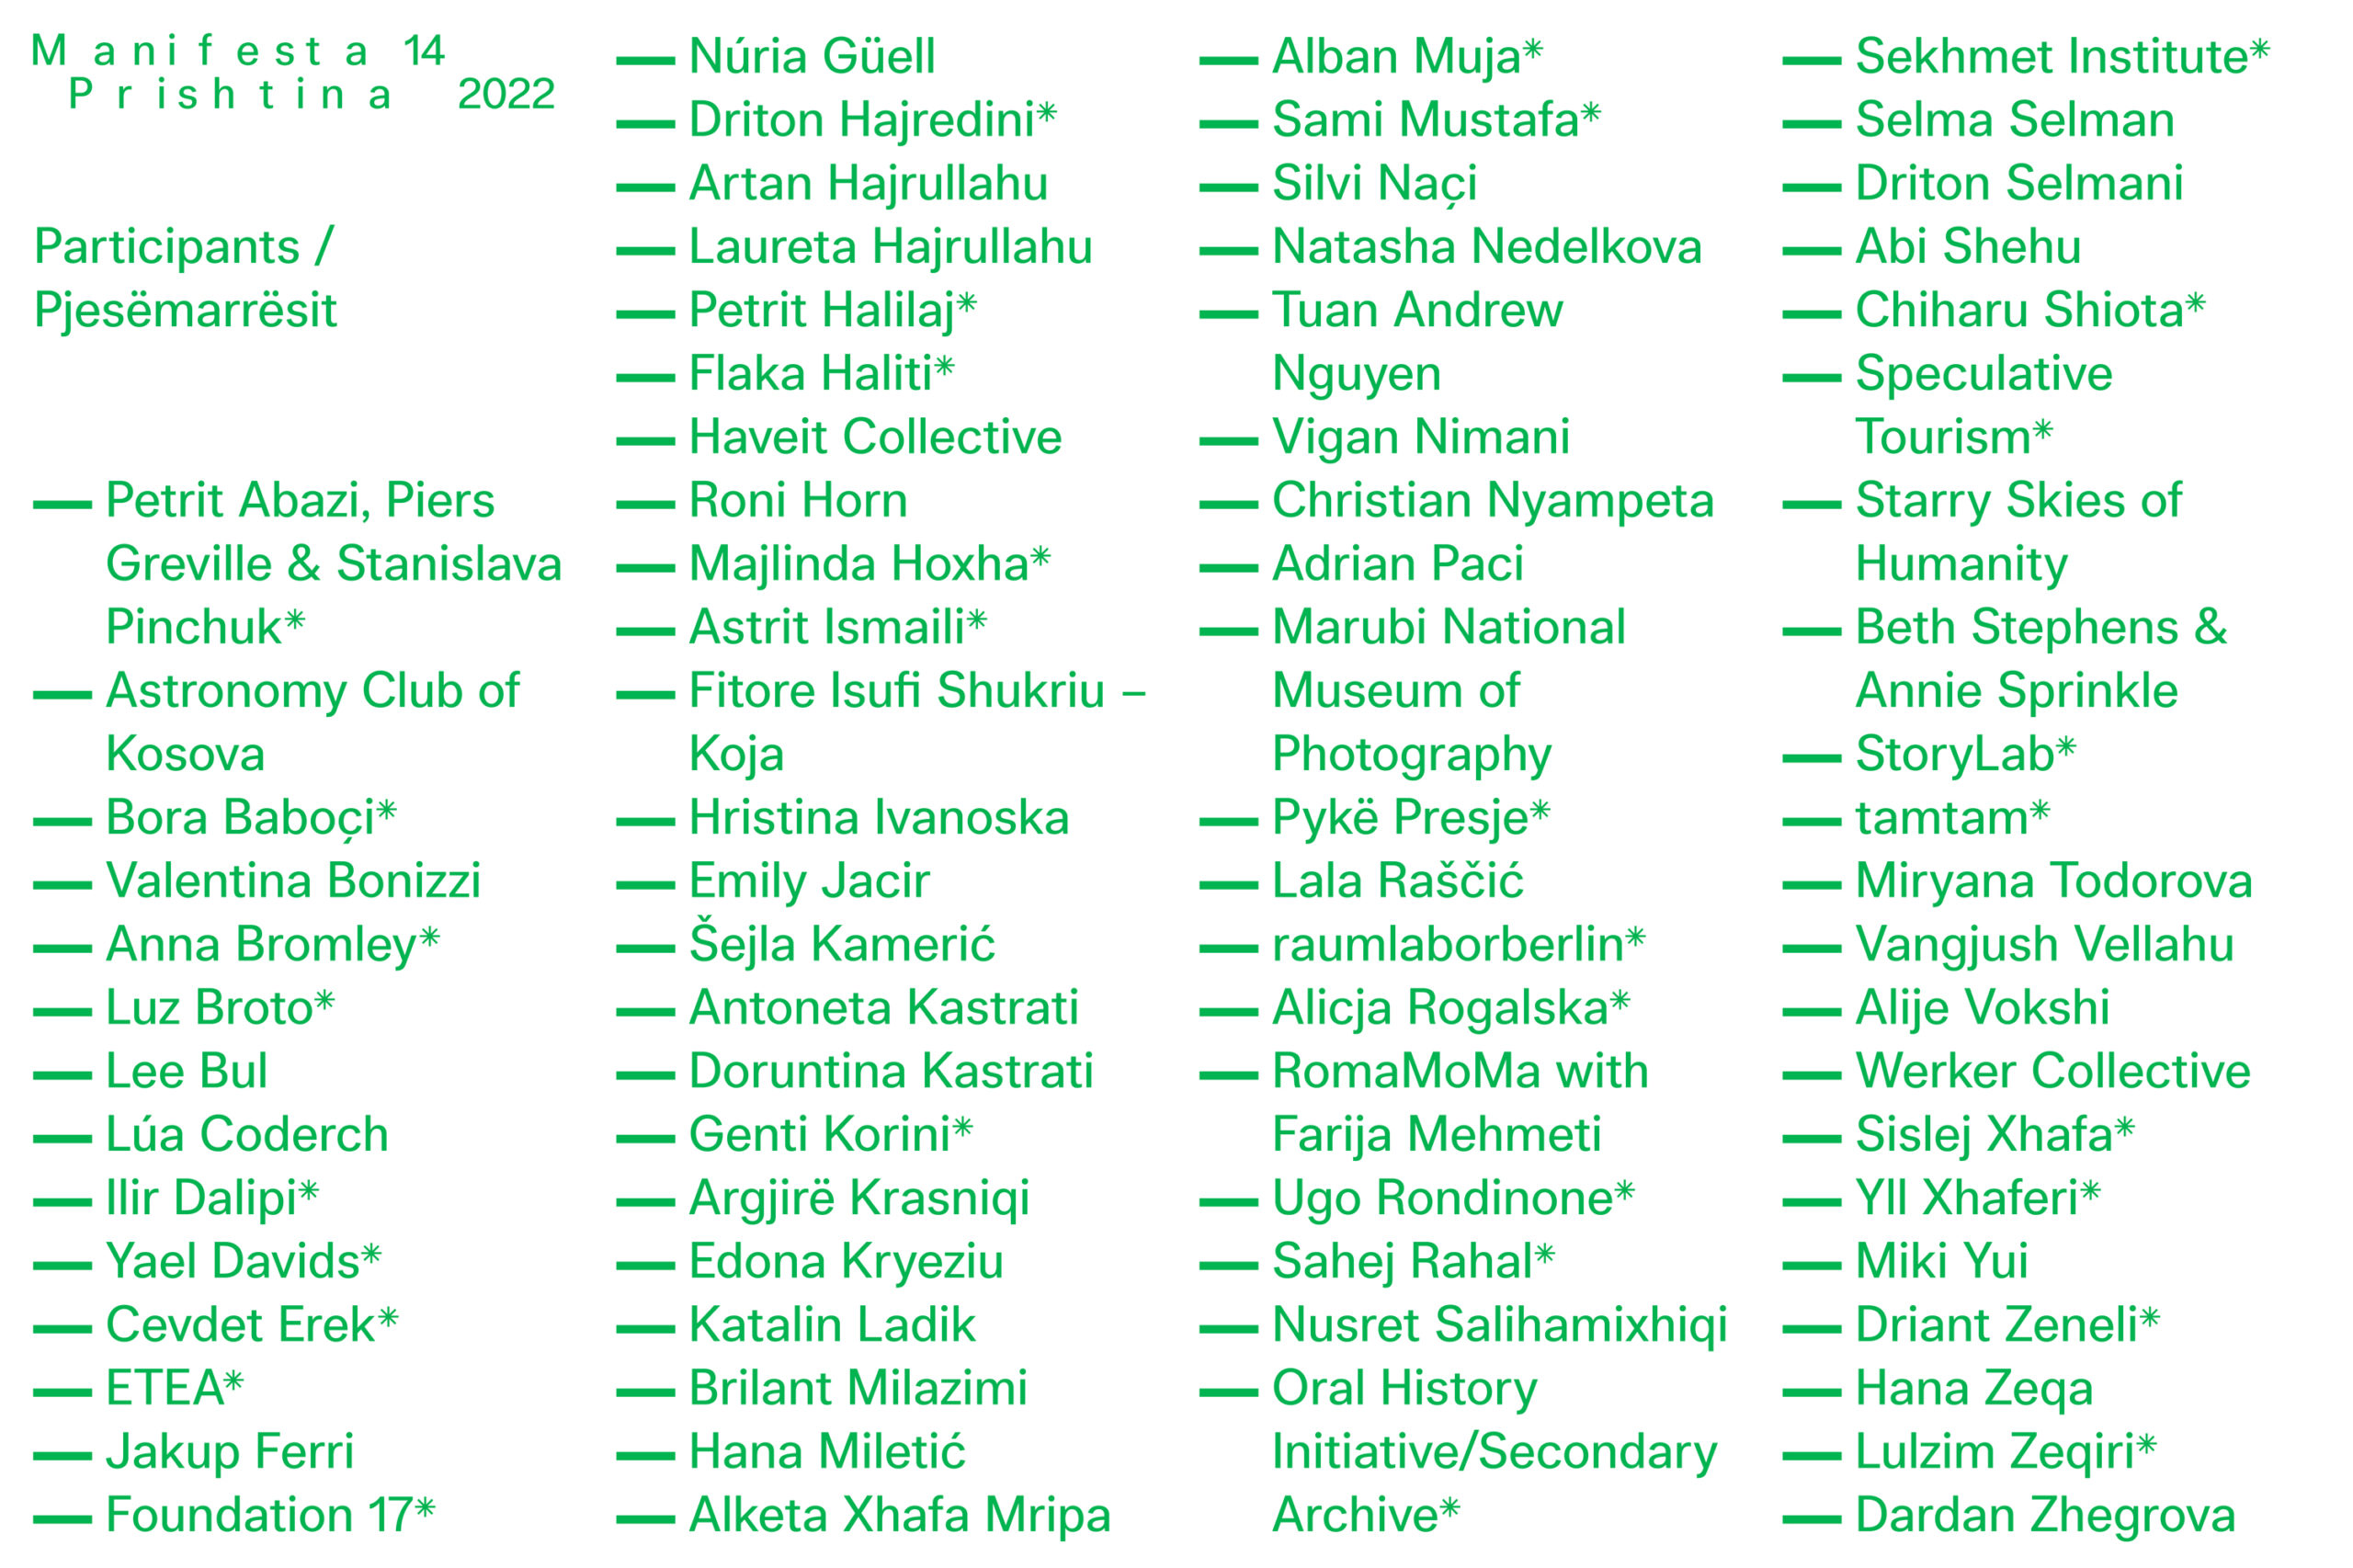 Manifesta 14's initial participant list 